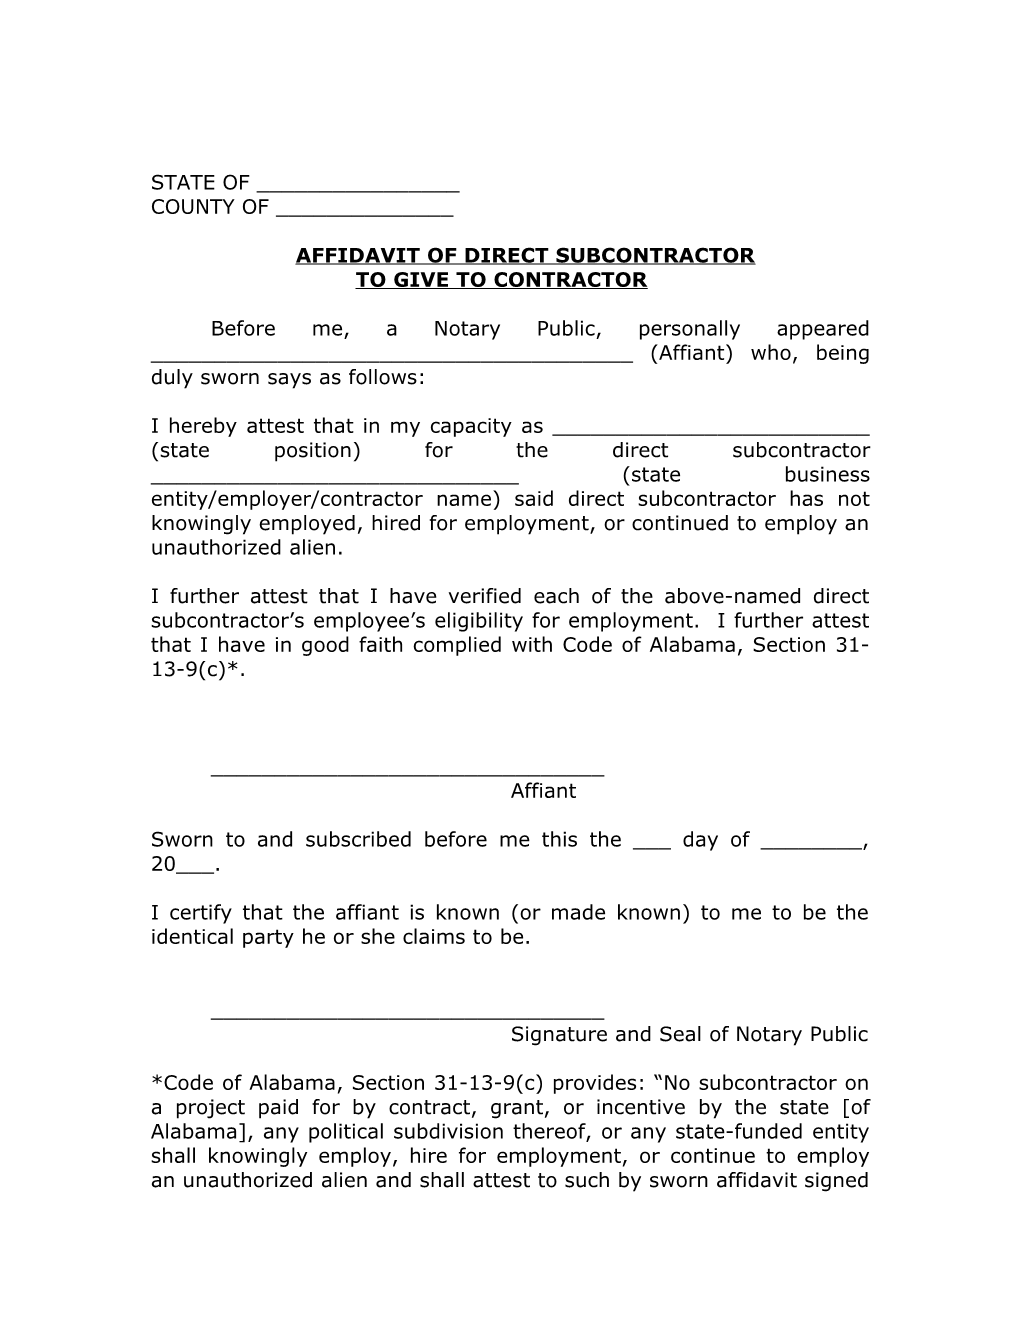 Affidavit of Direct Subcontractor